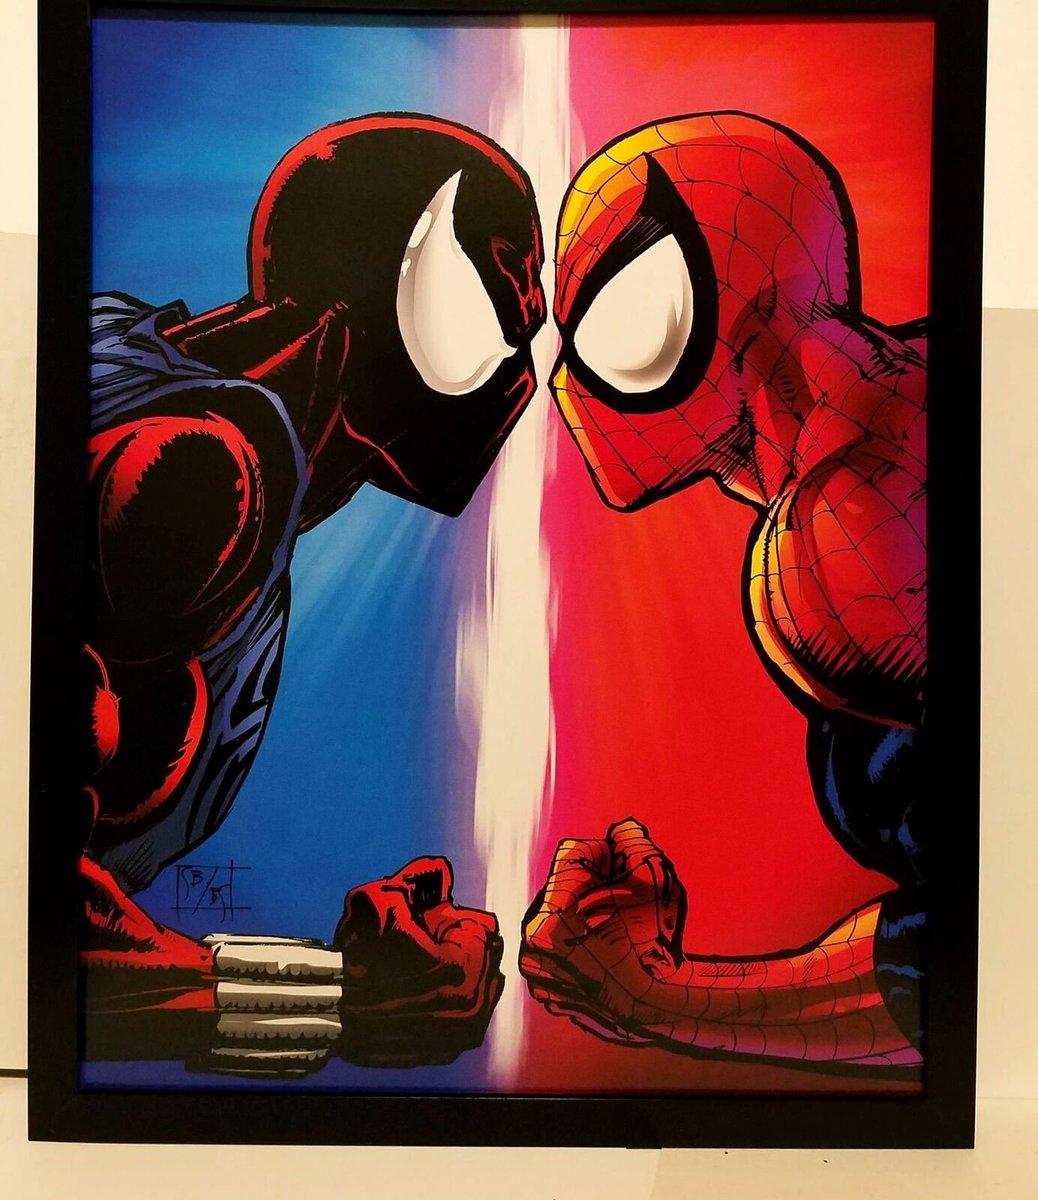 RT @spideymemoir: Spider-Man vs Scarlet Spider by Sal Buscema! https://t.co/5kjWGHf9sS